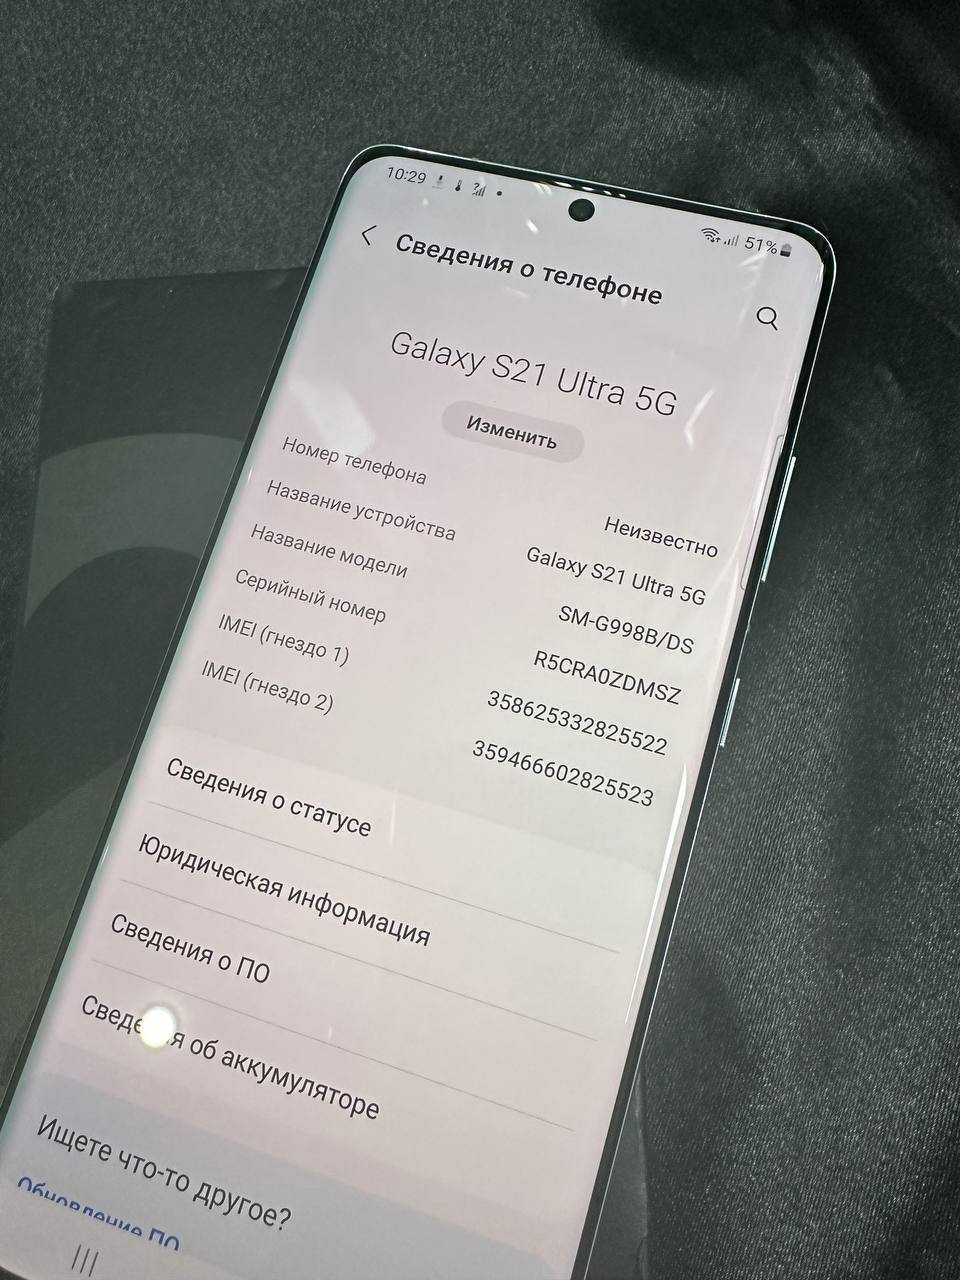 Samsung Galaxy S21 Ultra на 512 Gb Жабаева Петропавловск 305161